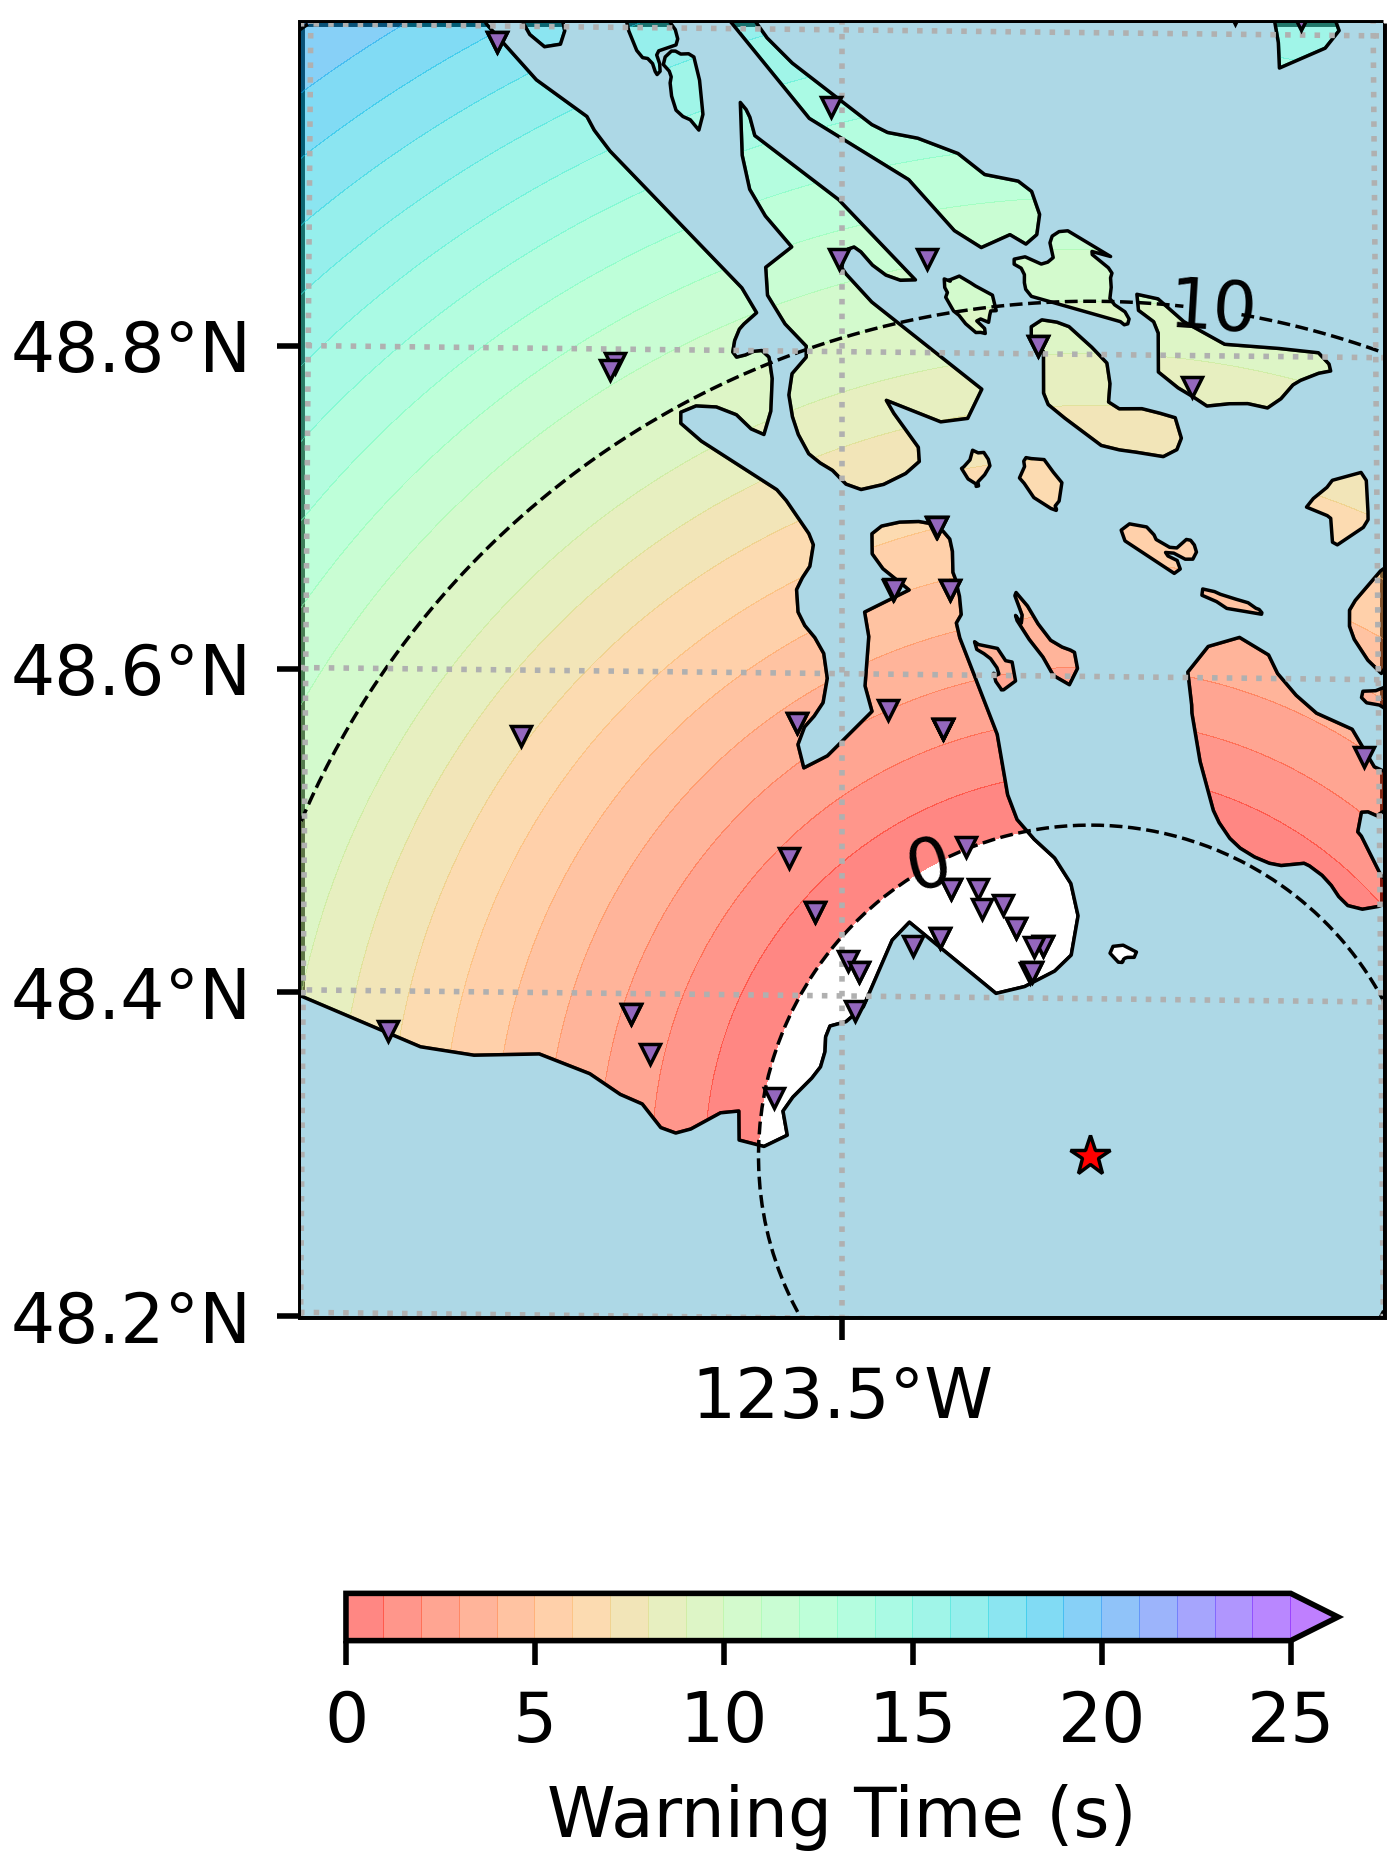 Victoria crustal earthquake warning times